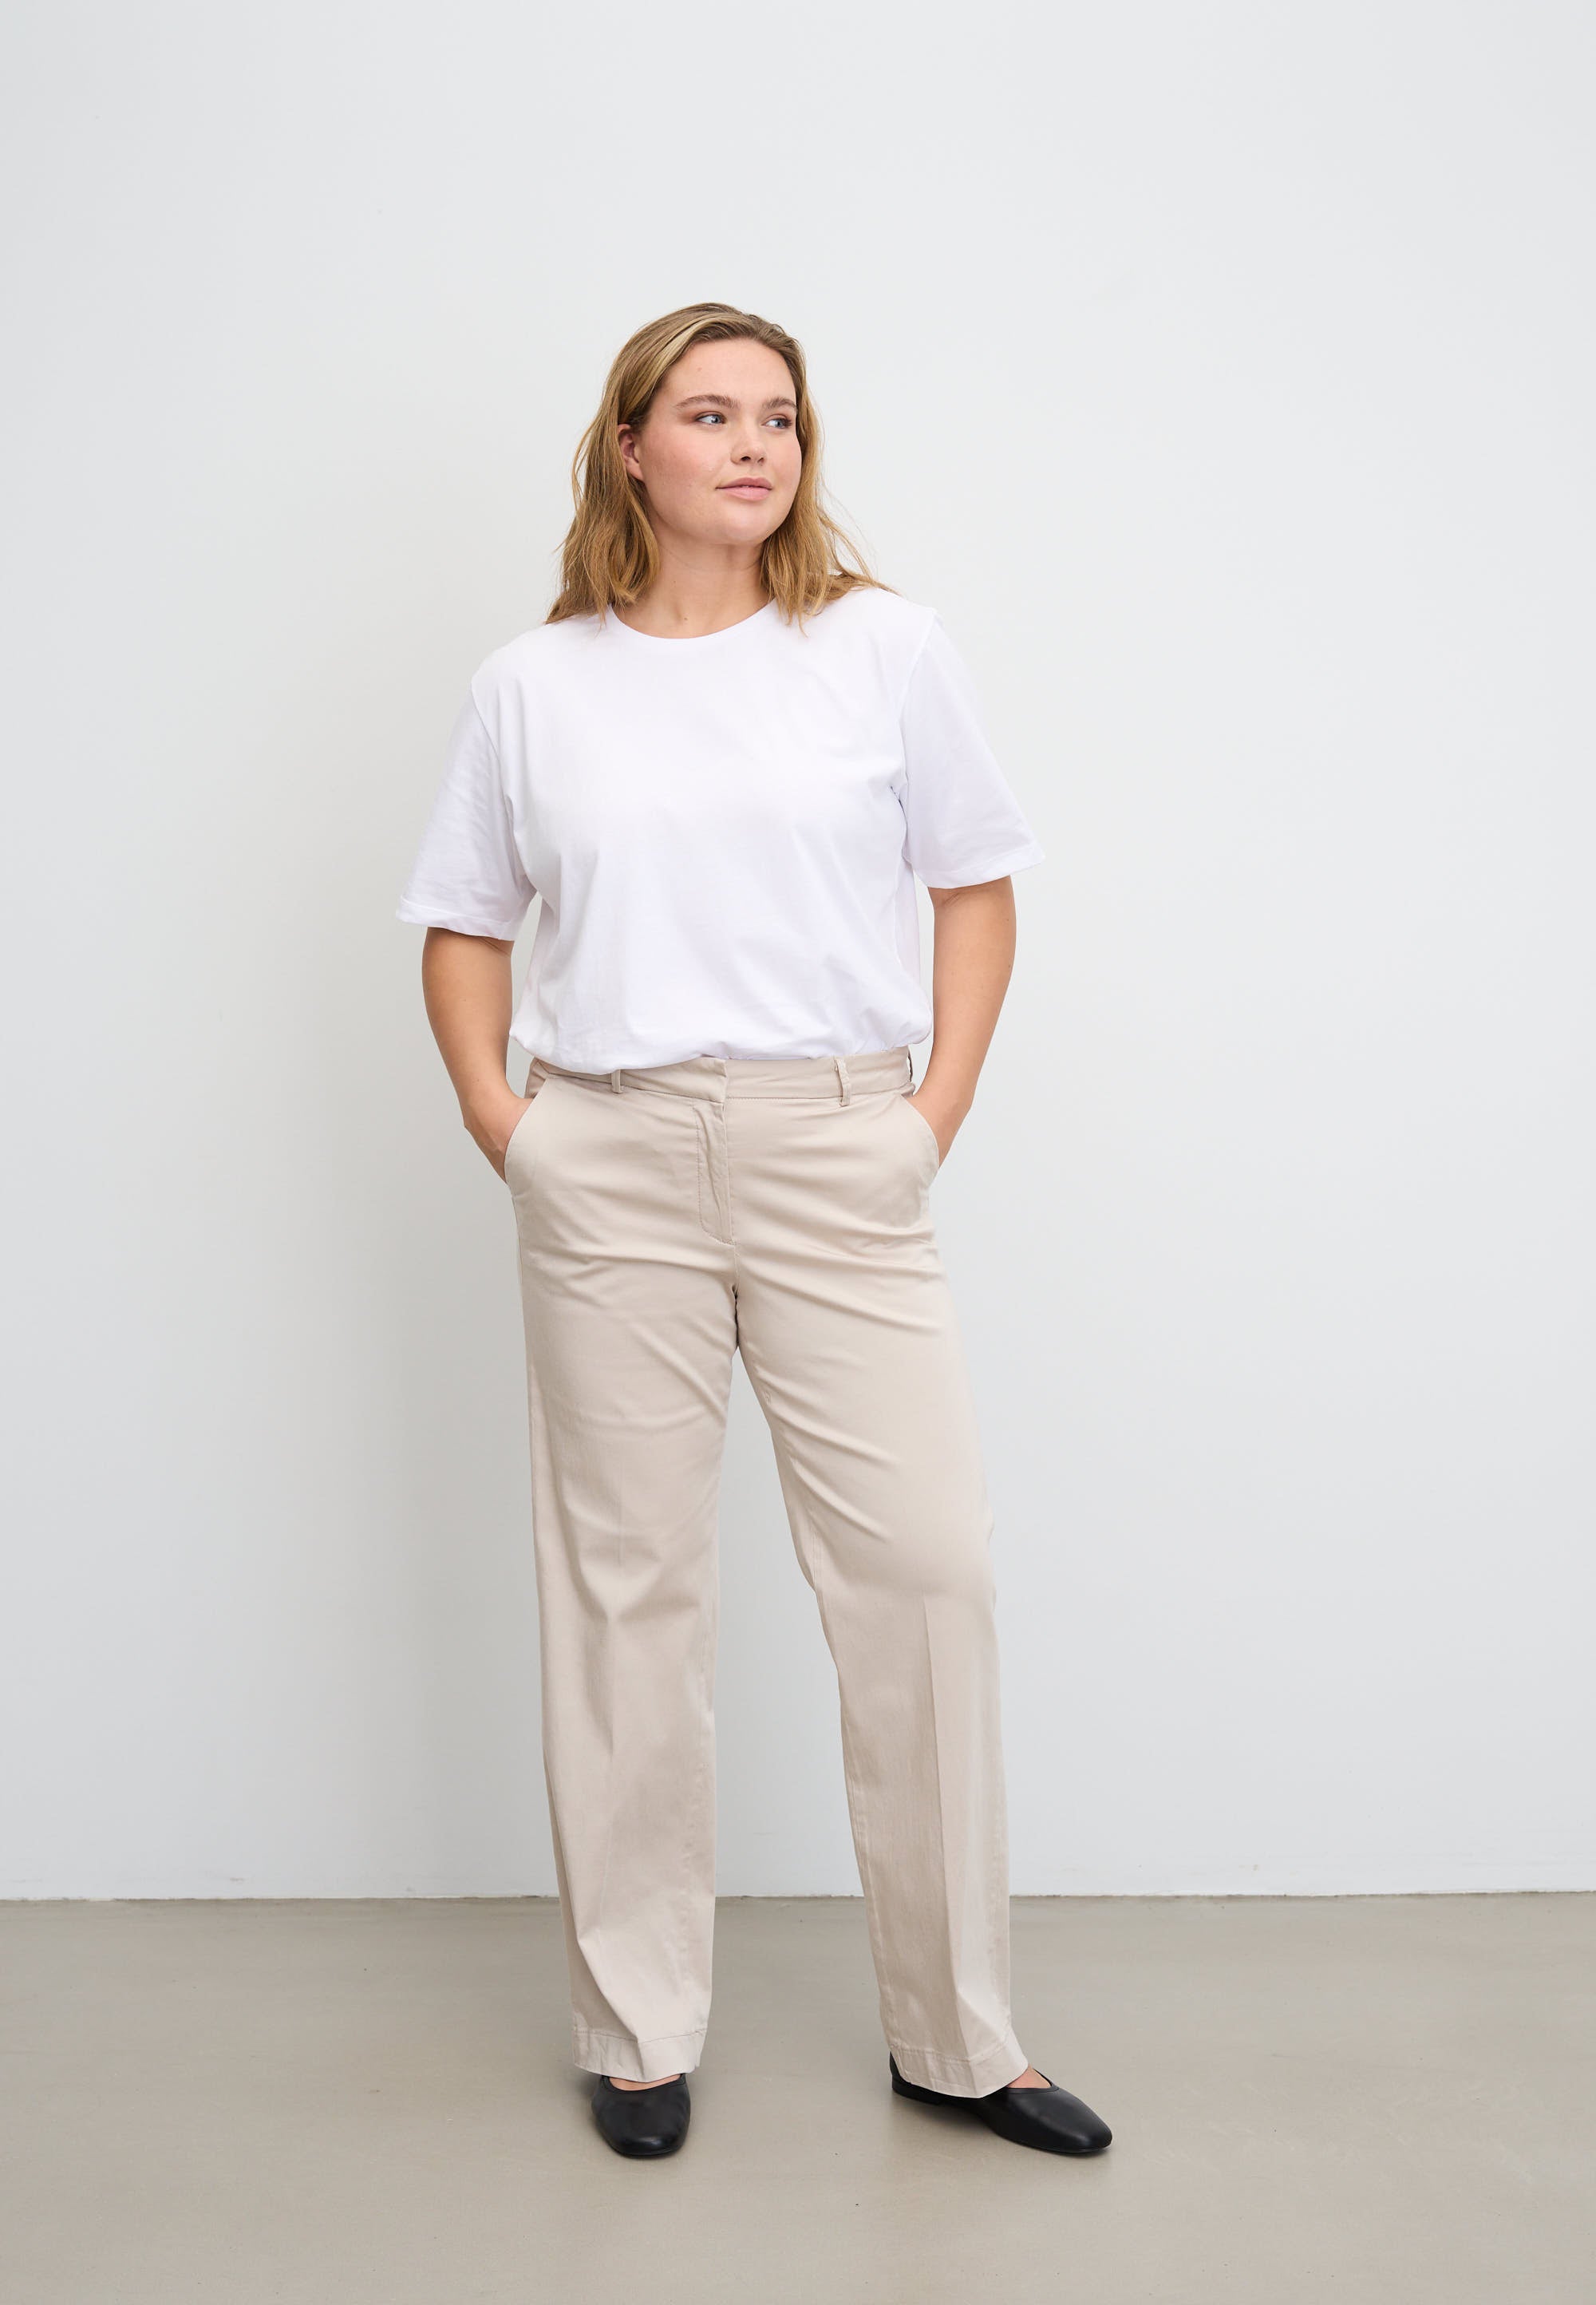 LAURIE Judy Straight - Medium Length Trousers STRAIGHT 25102 Grey Sand